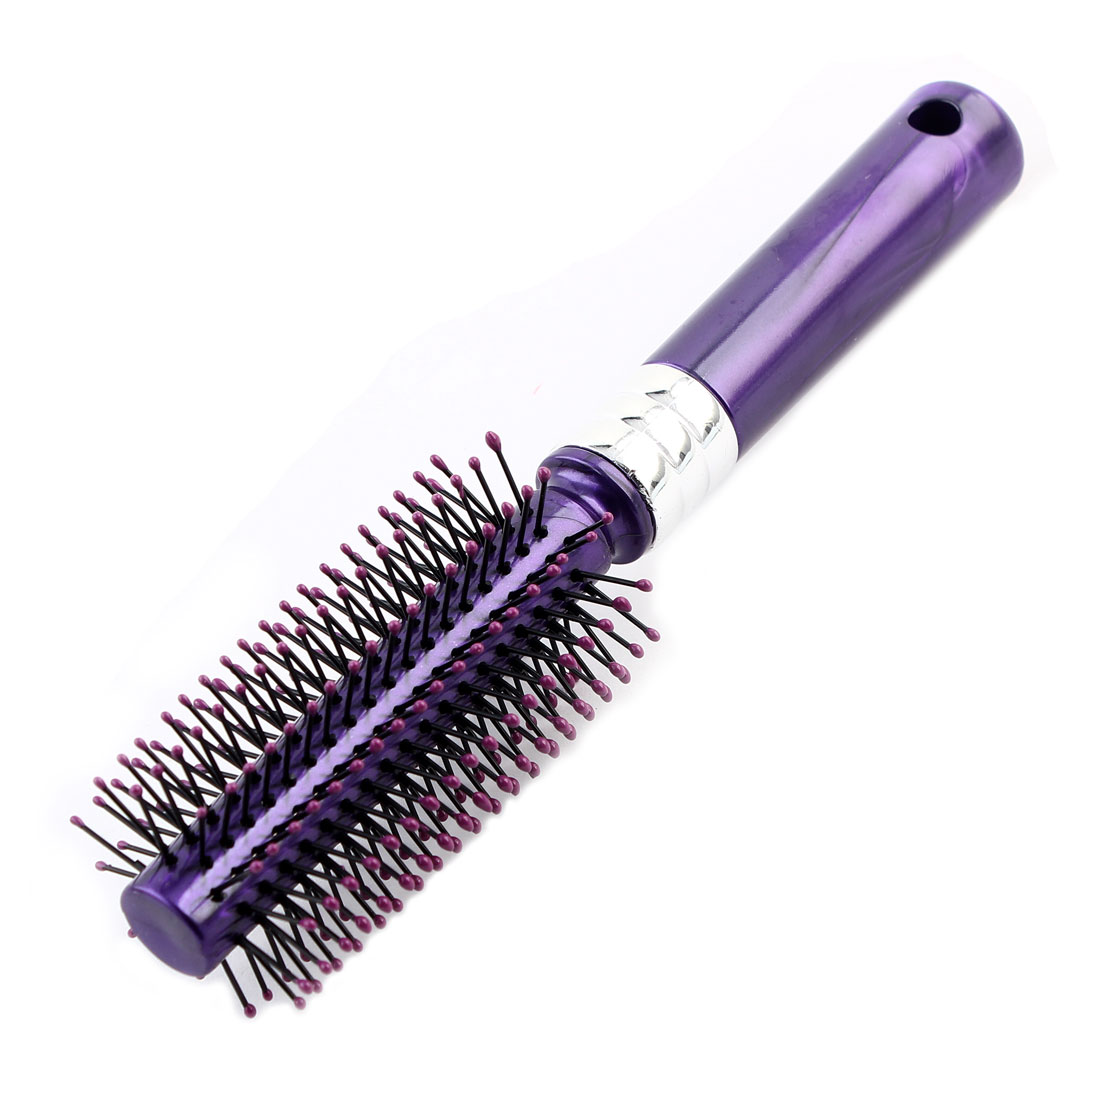 Unique Bargains Plastic Round Bristle Curly Hairdressing Hair Comb Brush Hairbrush Purple